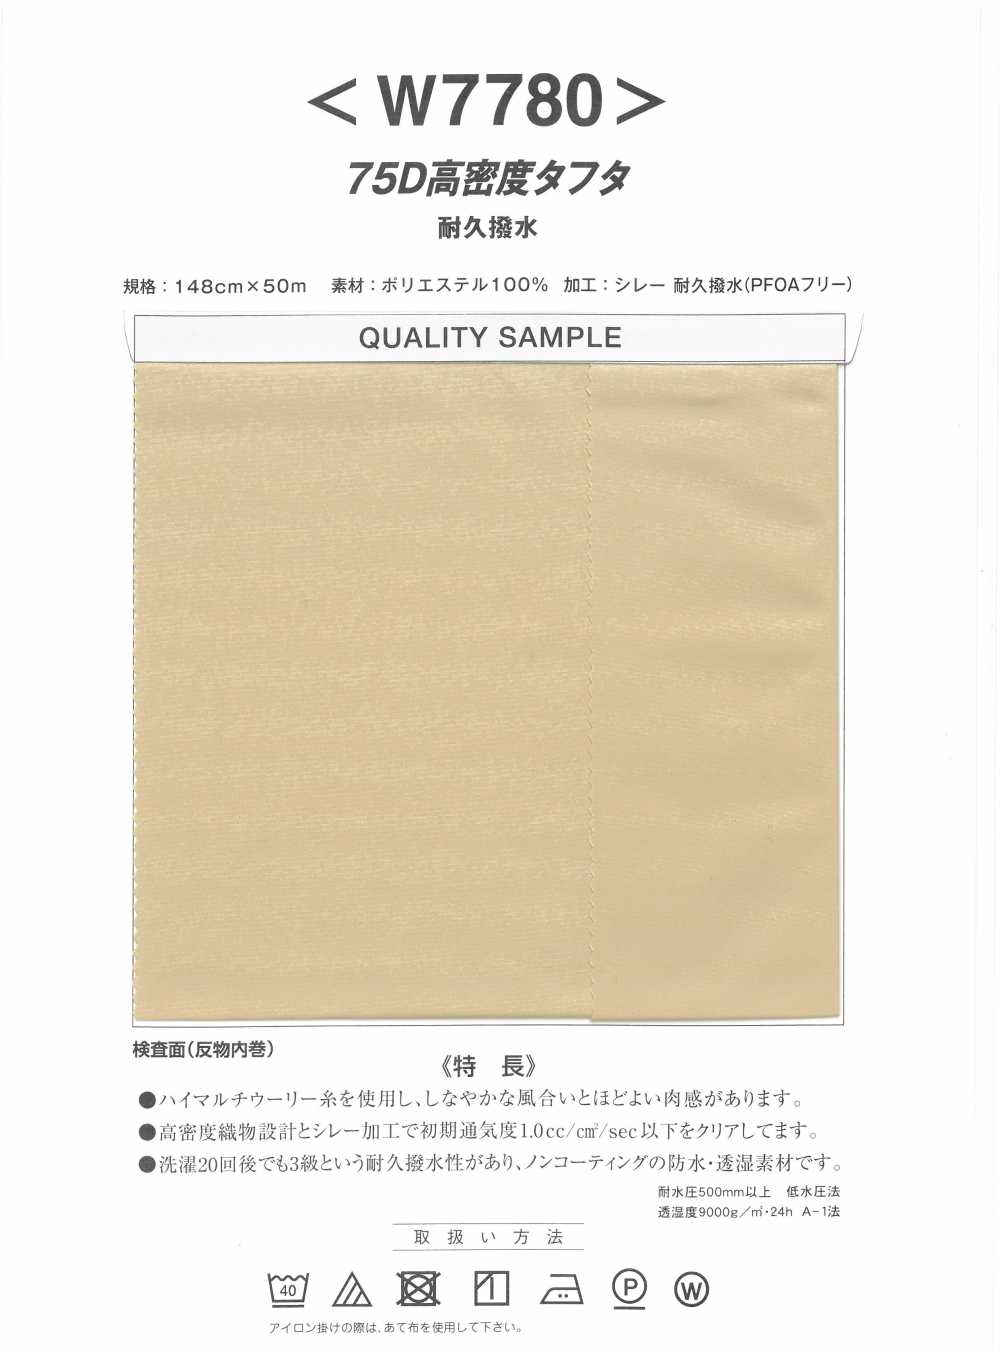 W7780 75D High Density Taft[Textilgewebe] Nishiyama